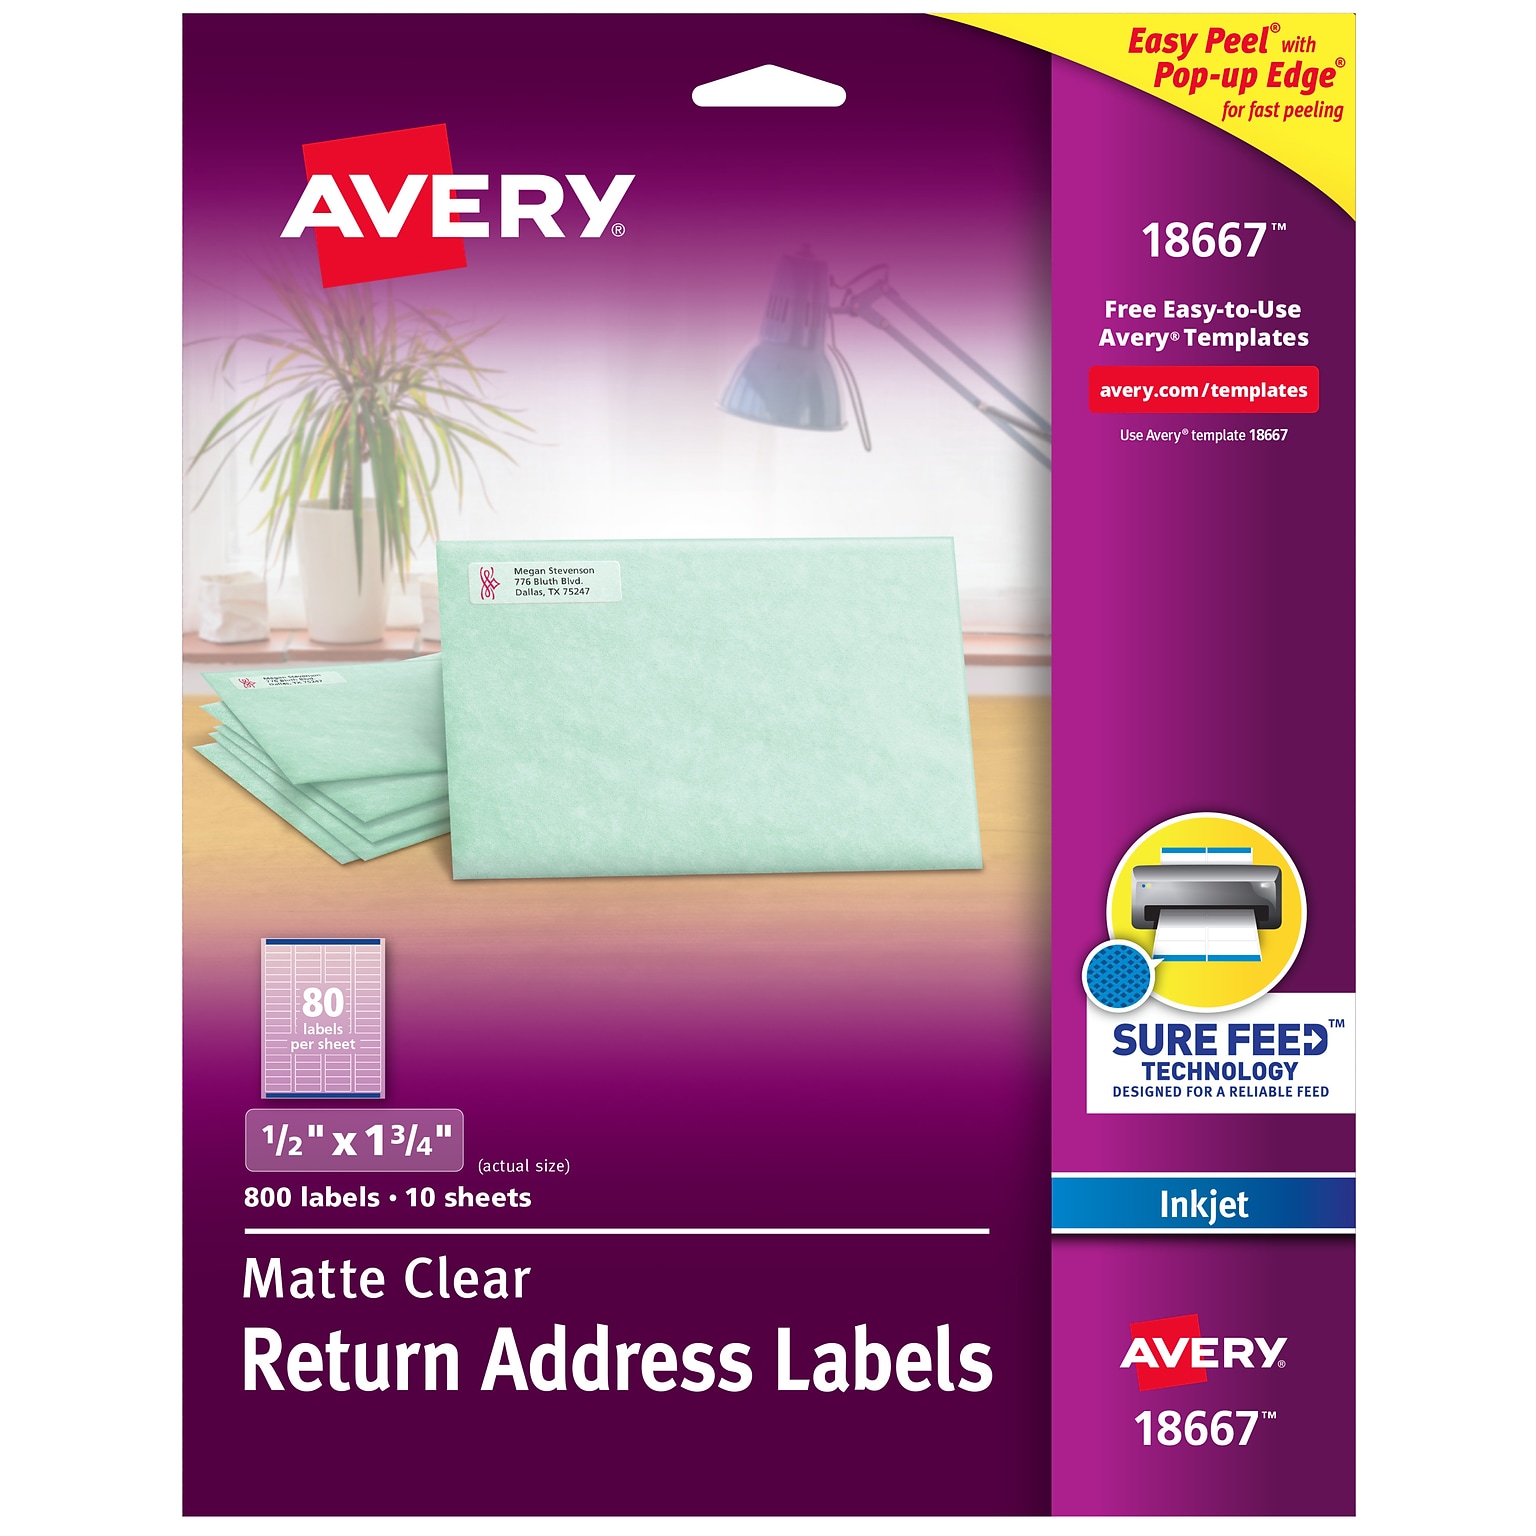 Avery Matte Clear Return Address Labels, Sure Feed Technology, Inkjet, 1/2 x 1-3/4, 800 Labels (18667)